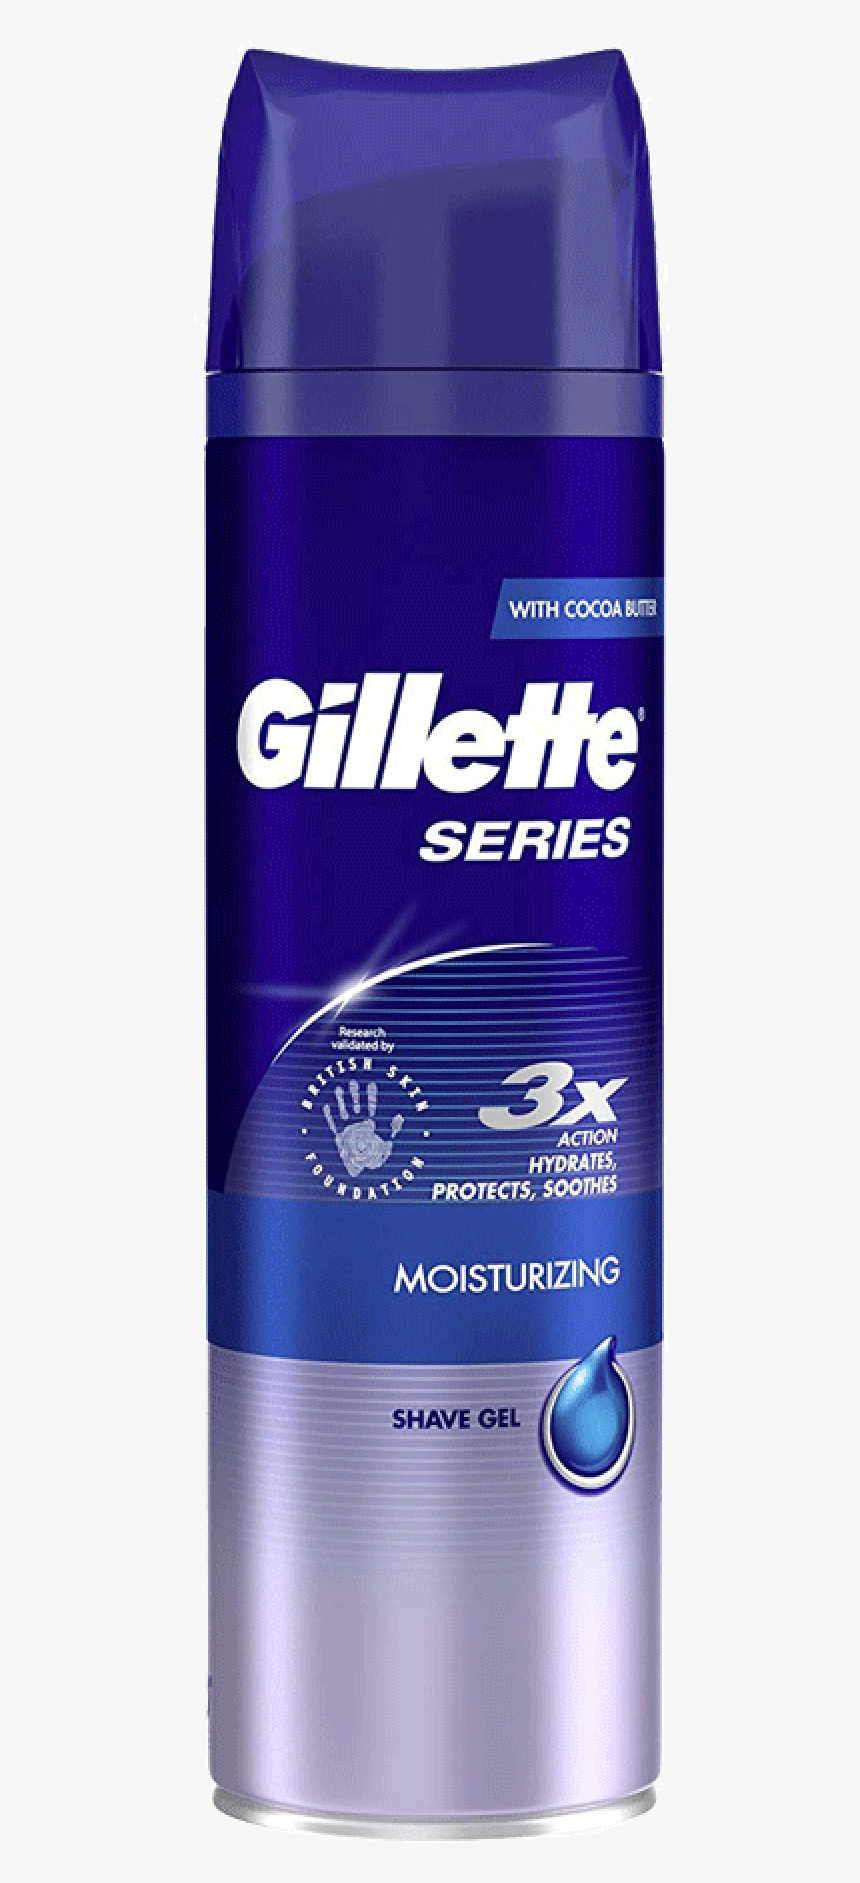 Gillette Shaving Gel Moisturizing With Cocoa Butter - Gillette Series Sensitive Shave Foam, HD Png Download, Free Download